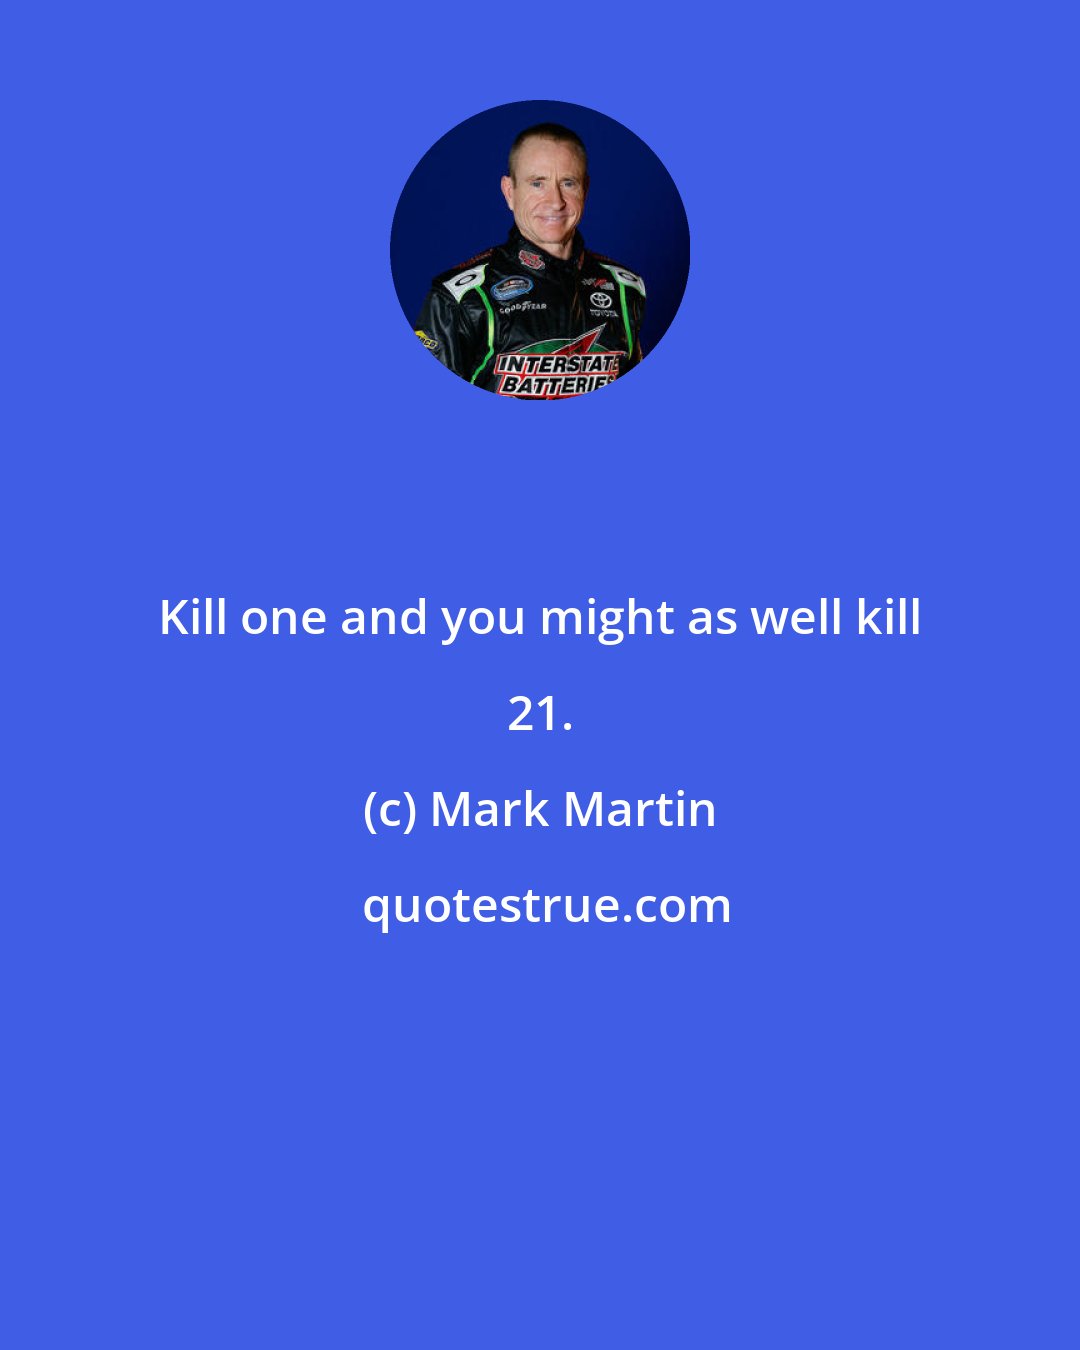 Mark Martin: Kill one and you might as well kill 21.